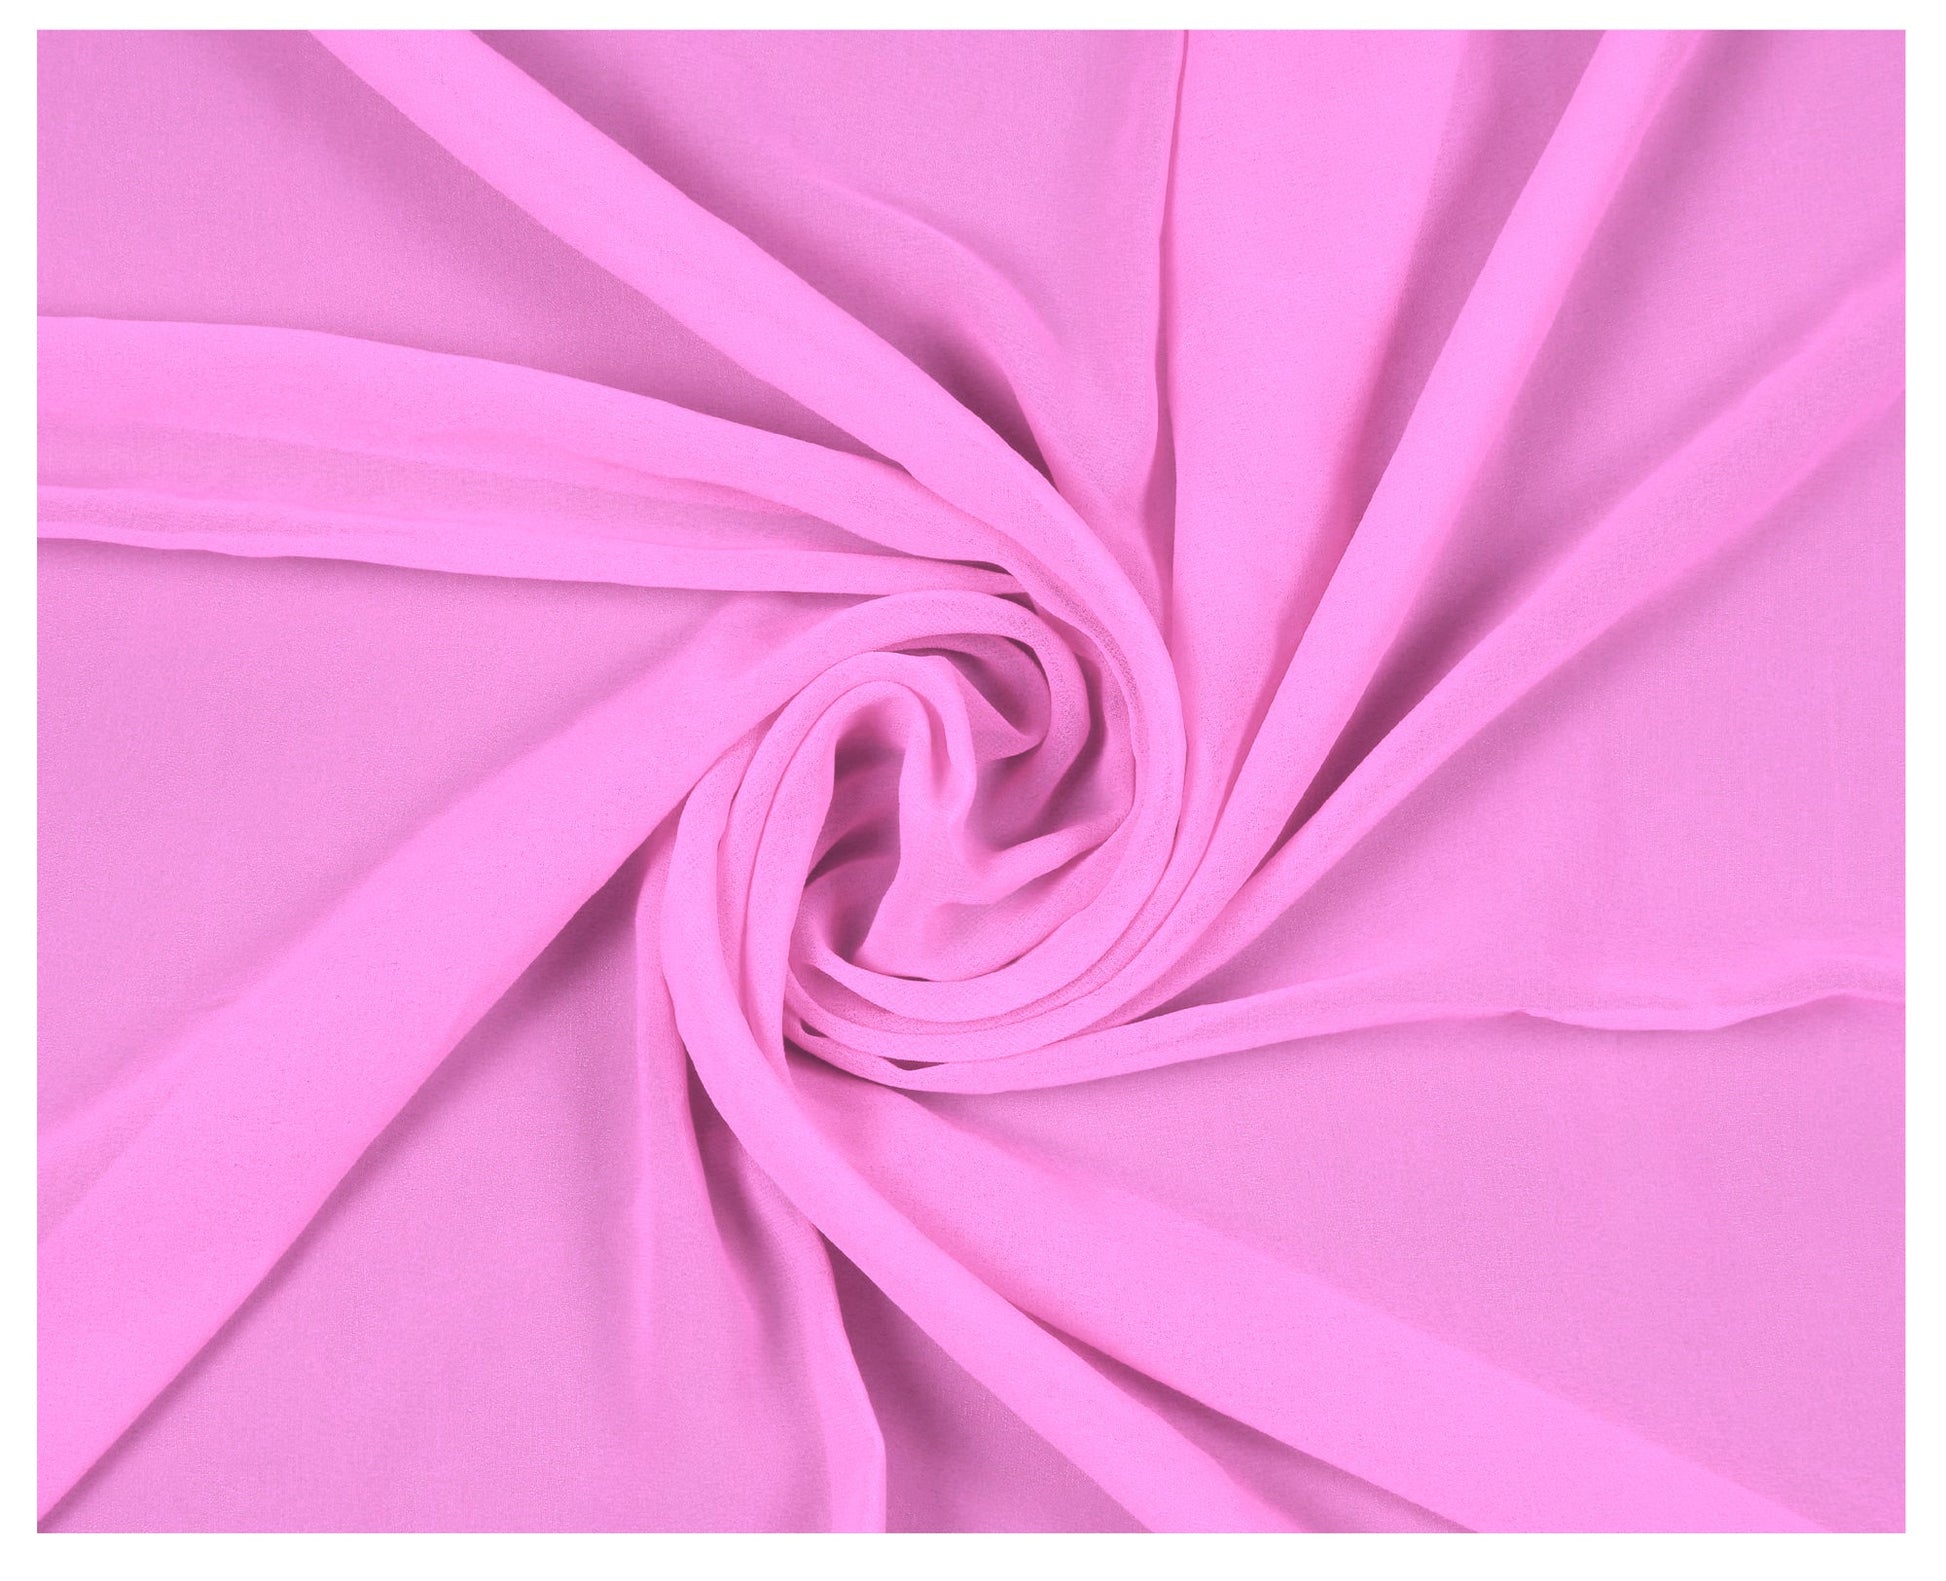 Bubblegum Pink,e7702d83-bb69-486f-a017-c50ce5d5b154